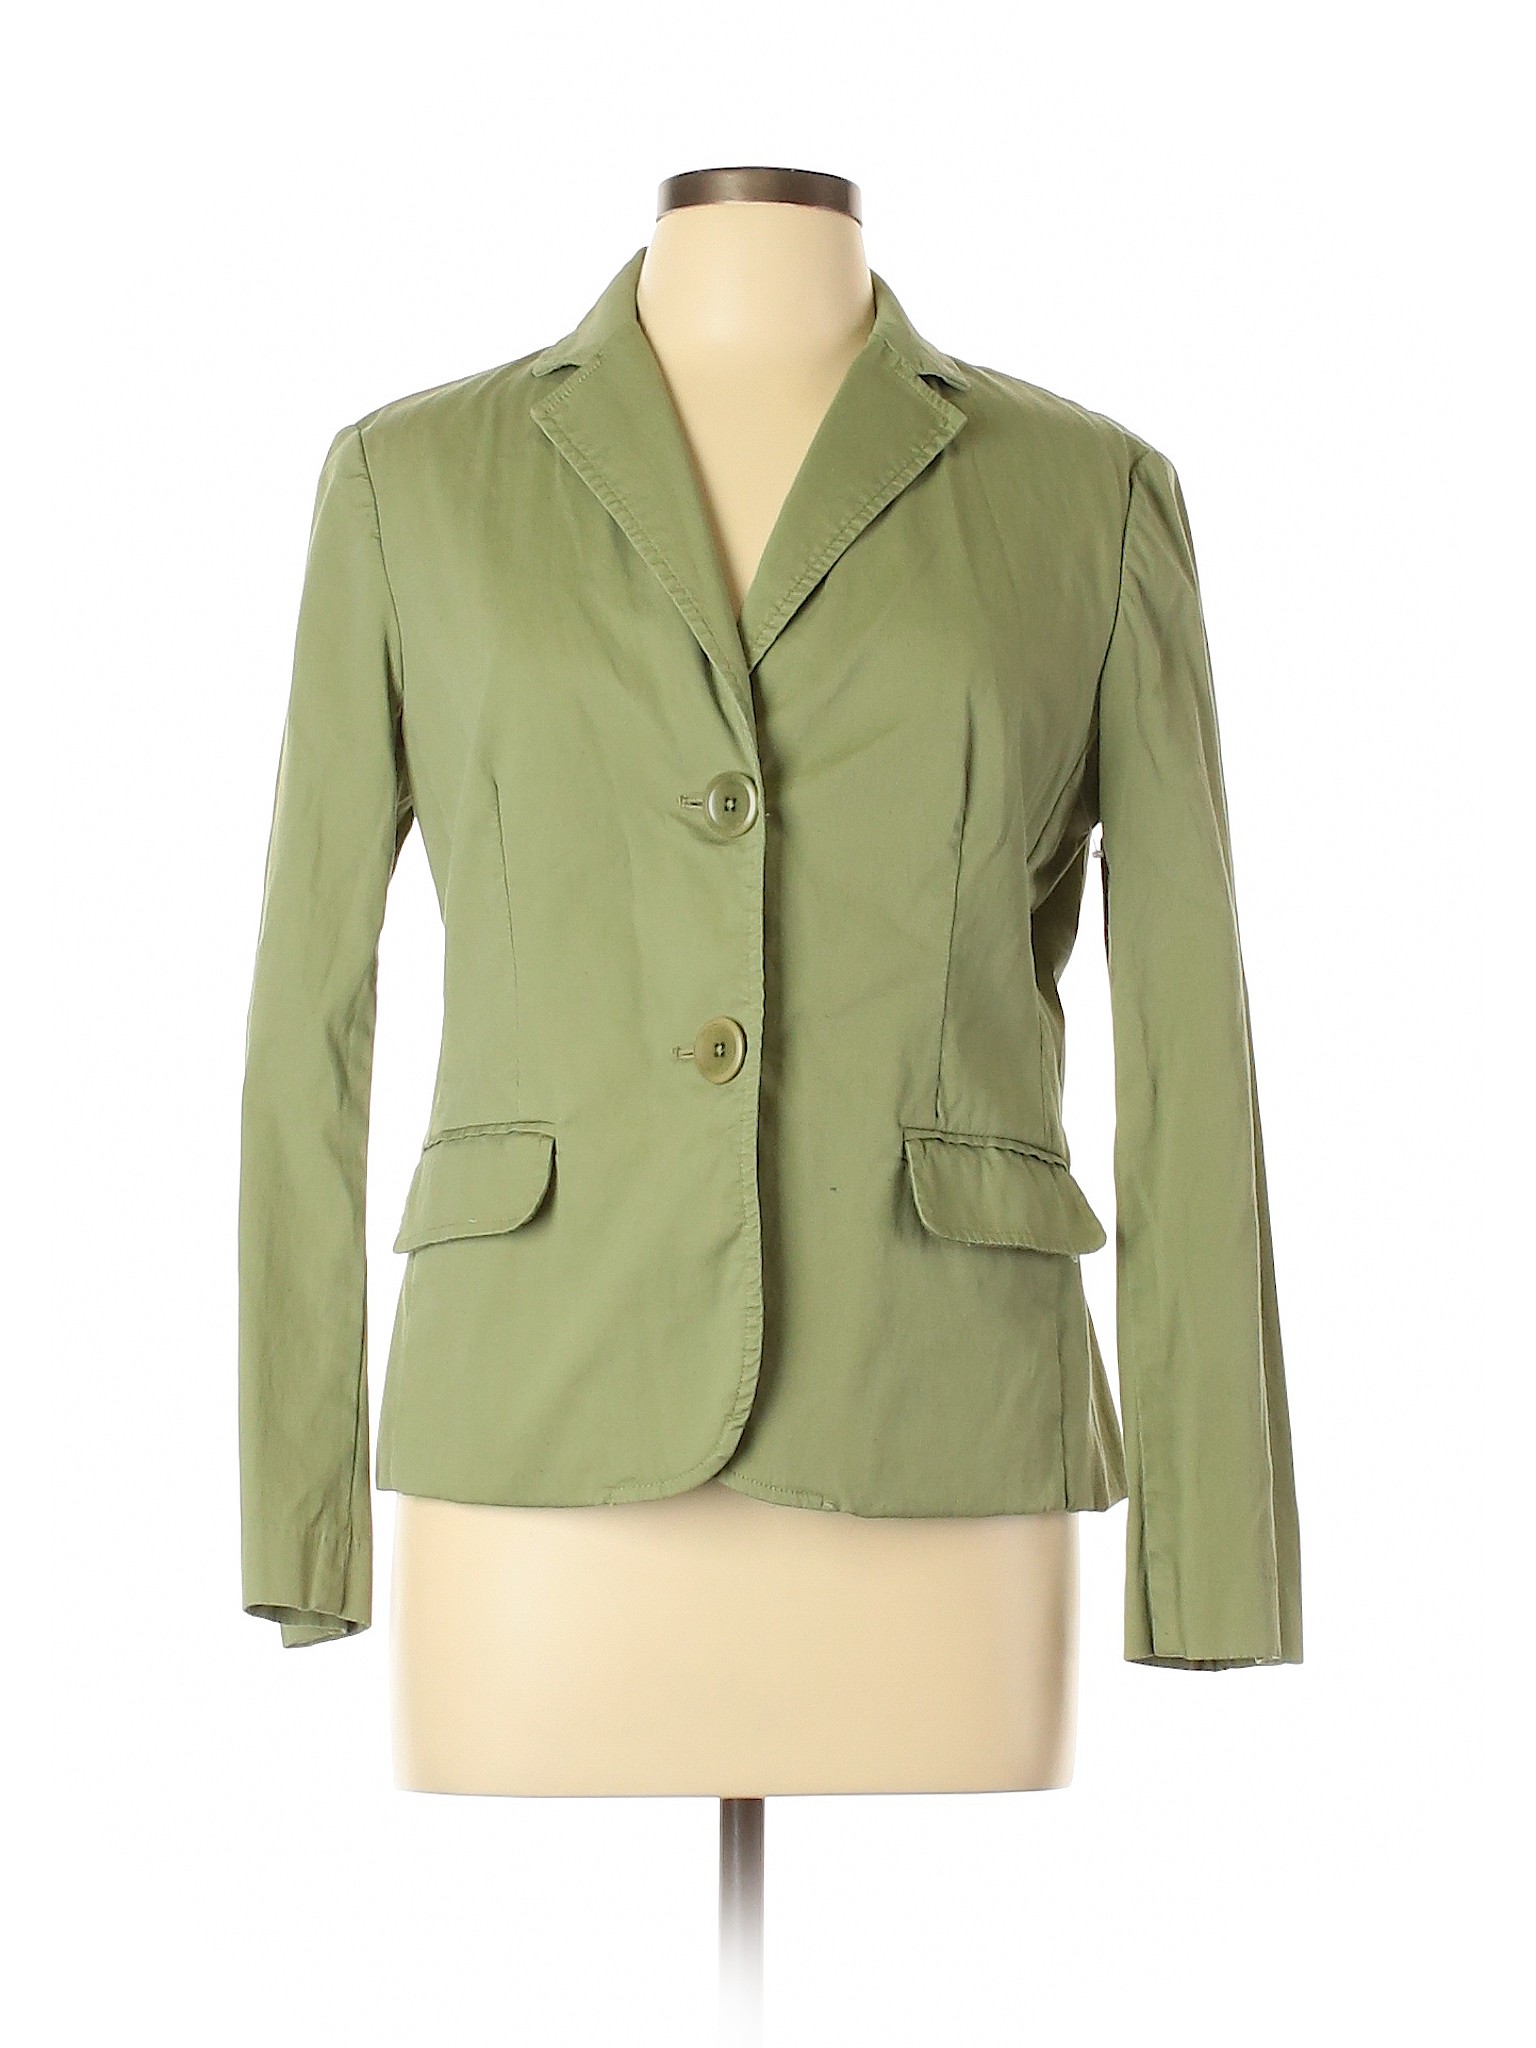 Talbots Women Green Jacket 12 Petites | eBay